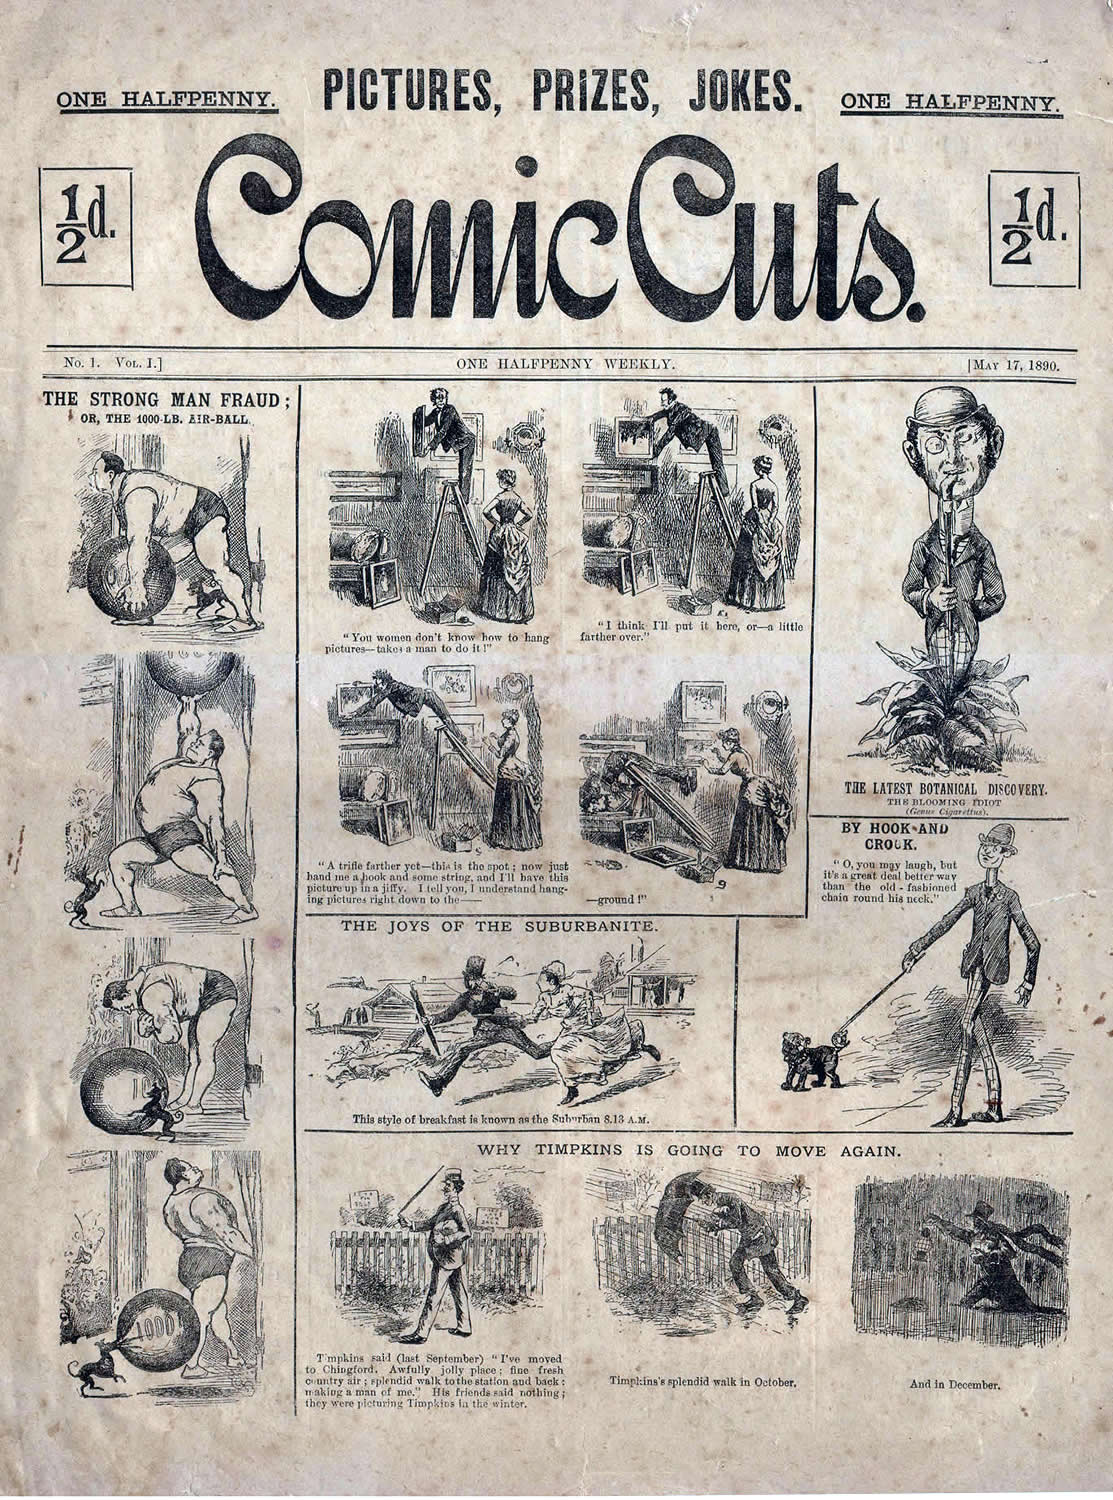 Comic Cuts | UK Comics Wiki | FANDOM powered by Wikia